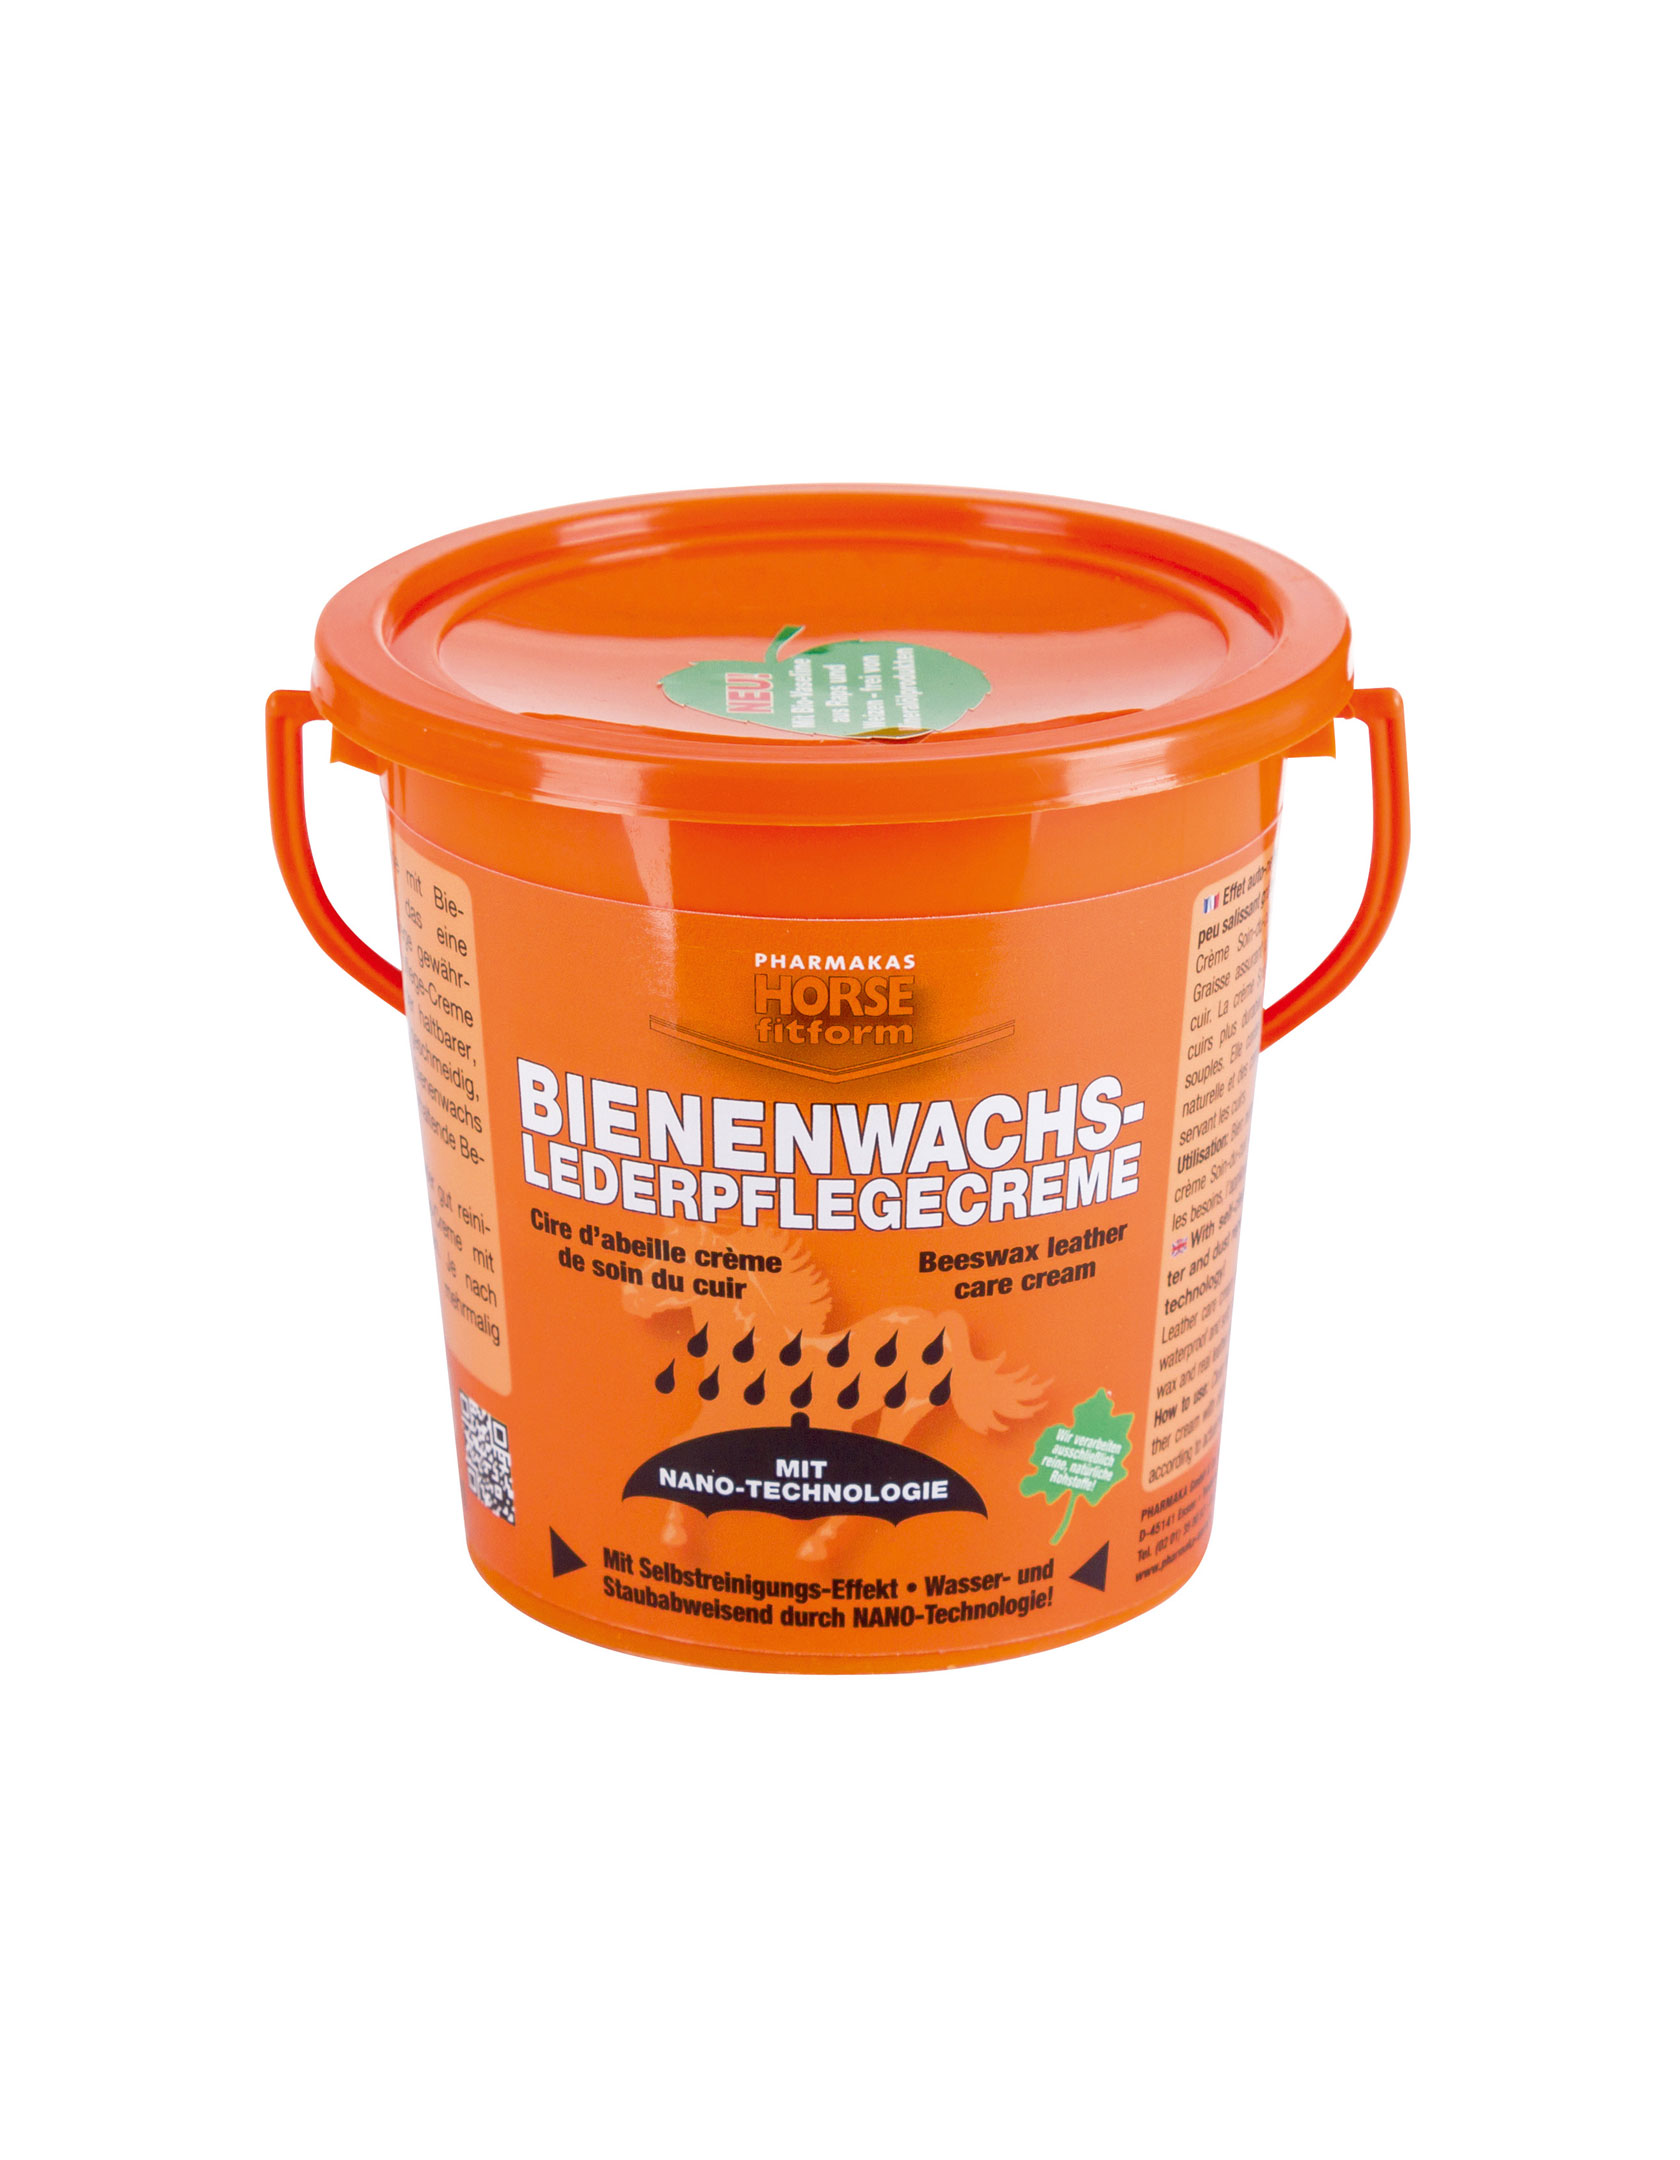 Bienenwachs-Lederpflegecreme - 450 ml